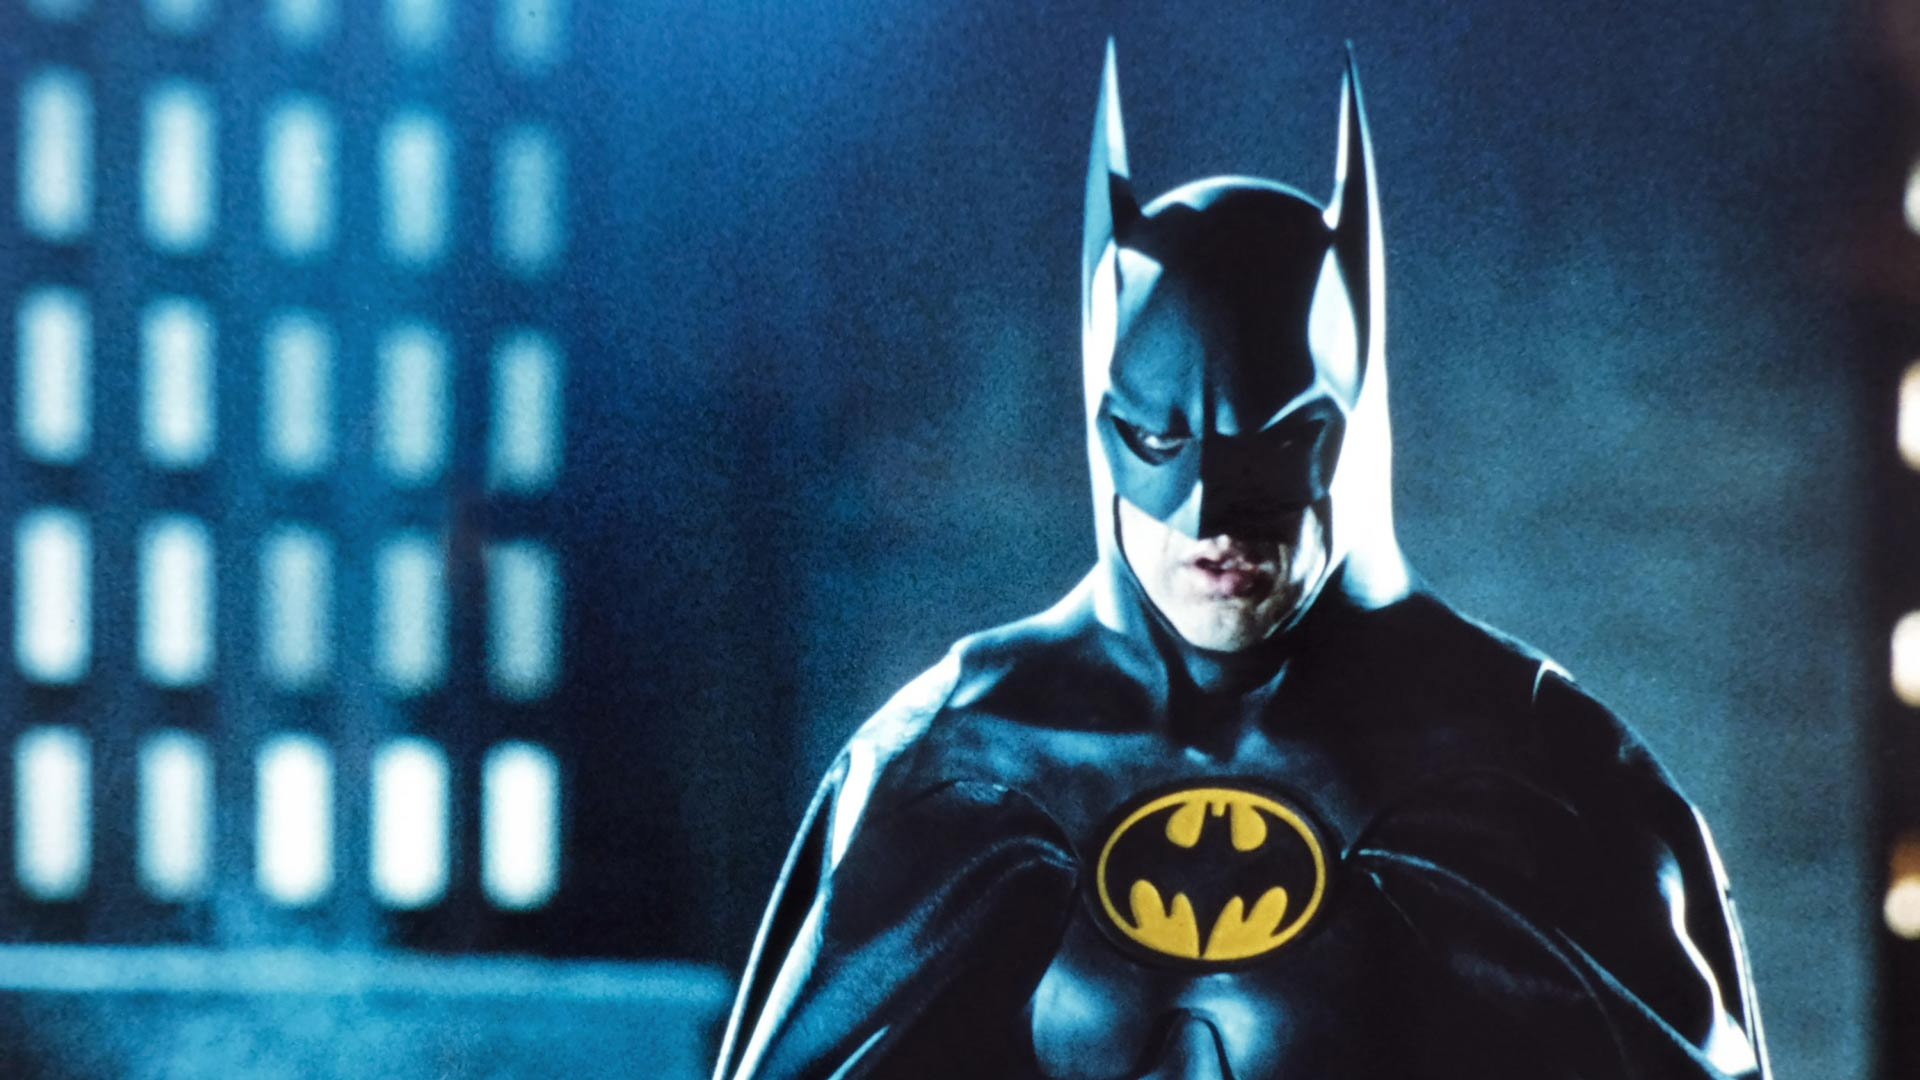 Michael Keaton's Batman Return Canceled?